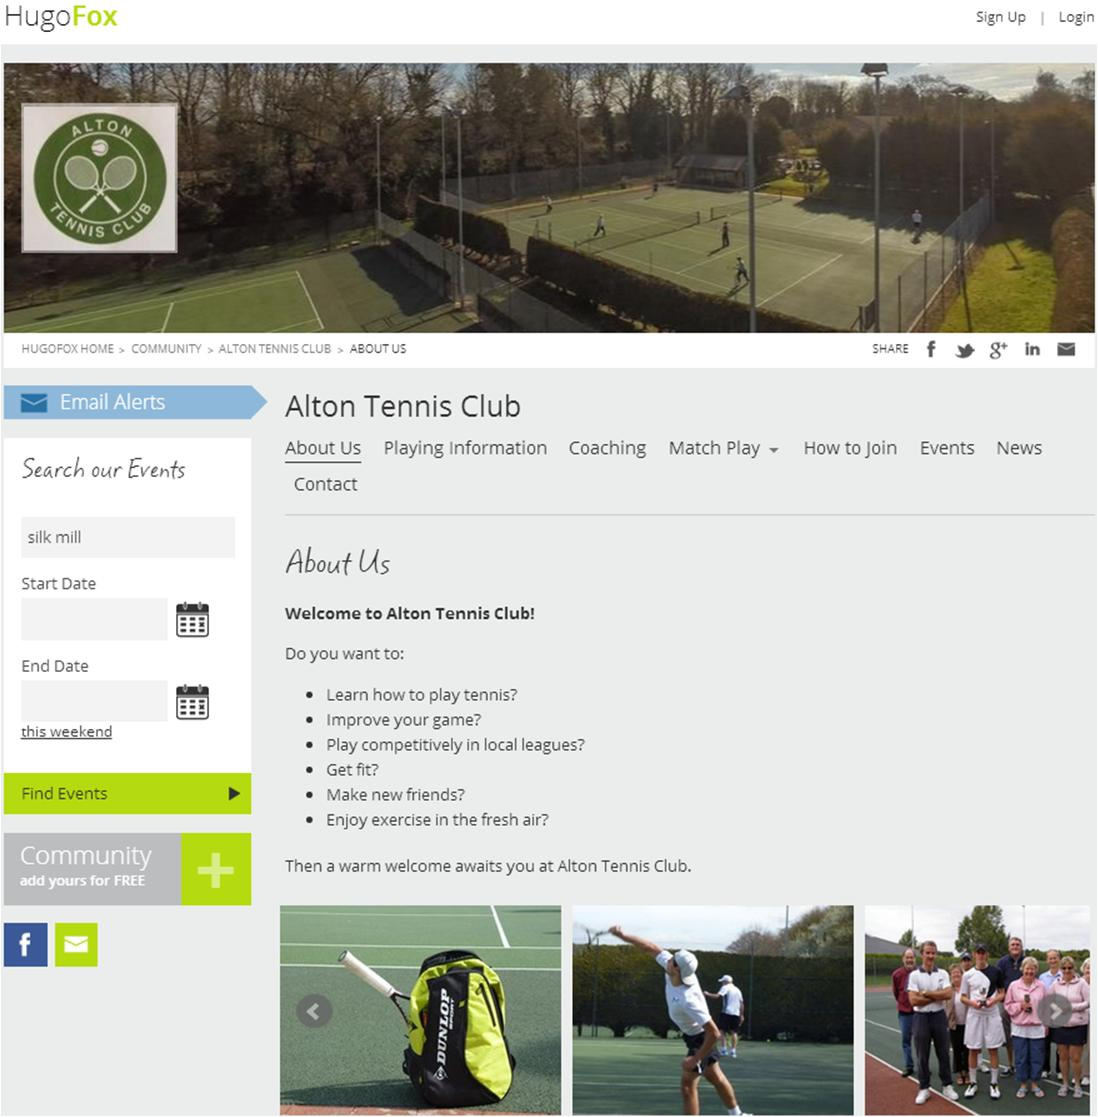 Figure 1: Alton Tennis Club - About Us